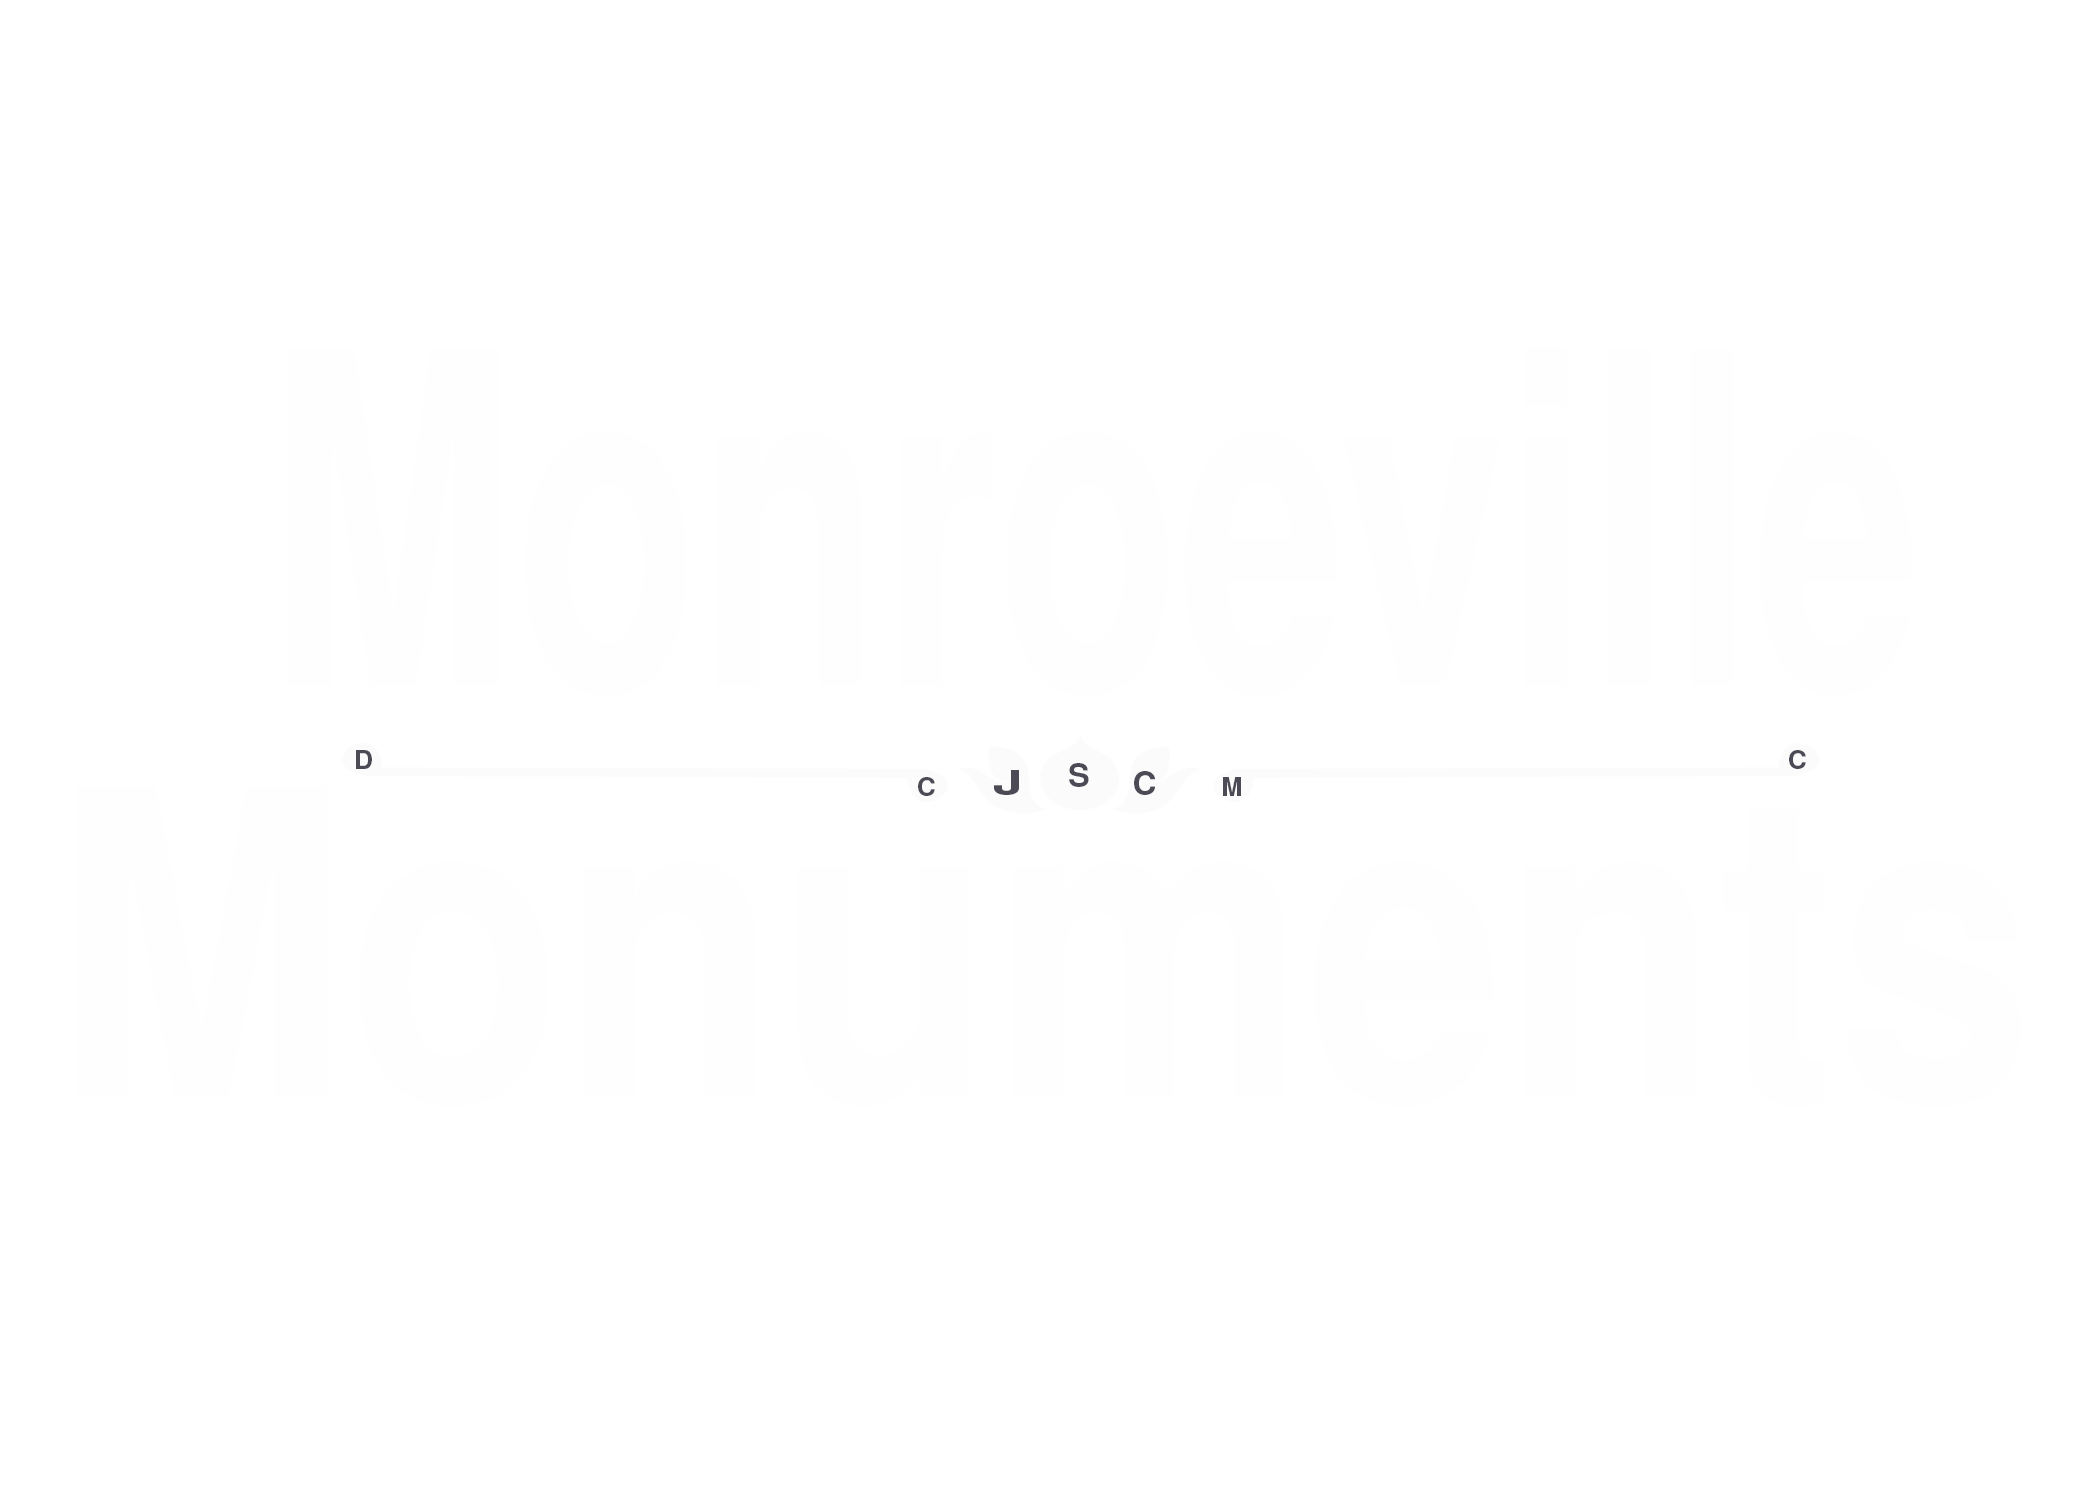 Monroeville Monuments